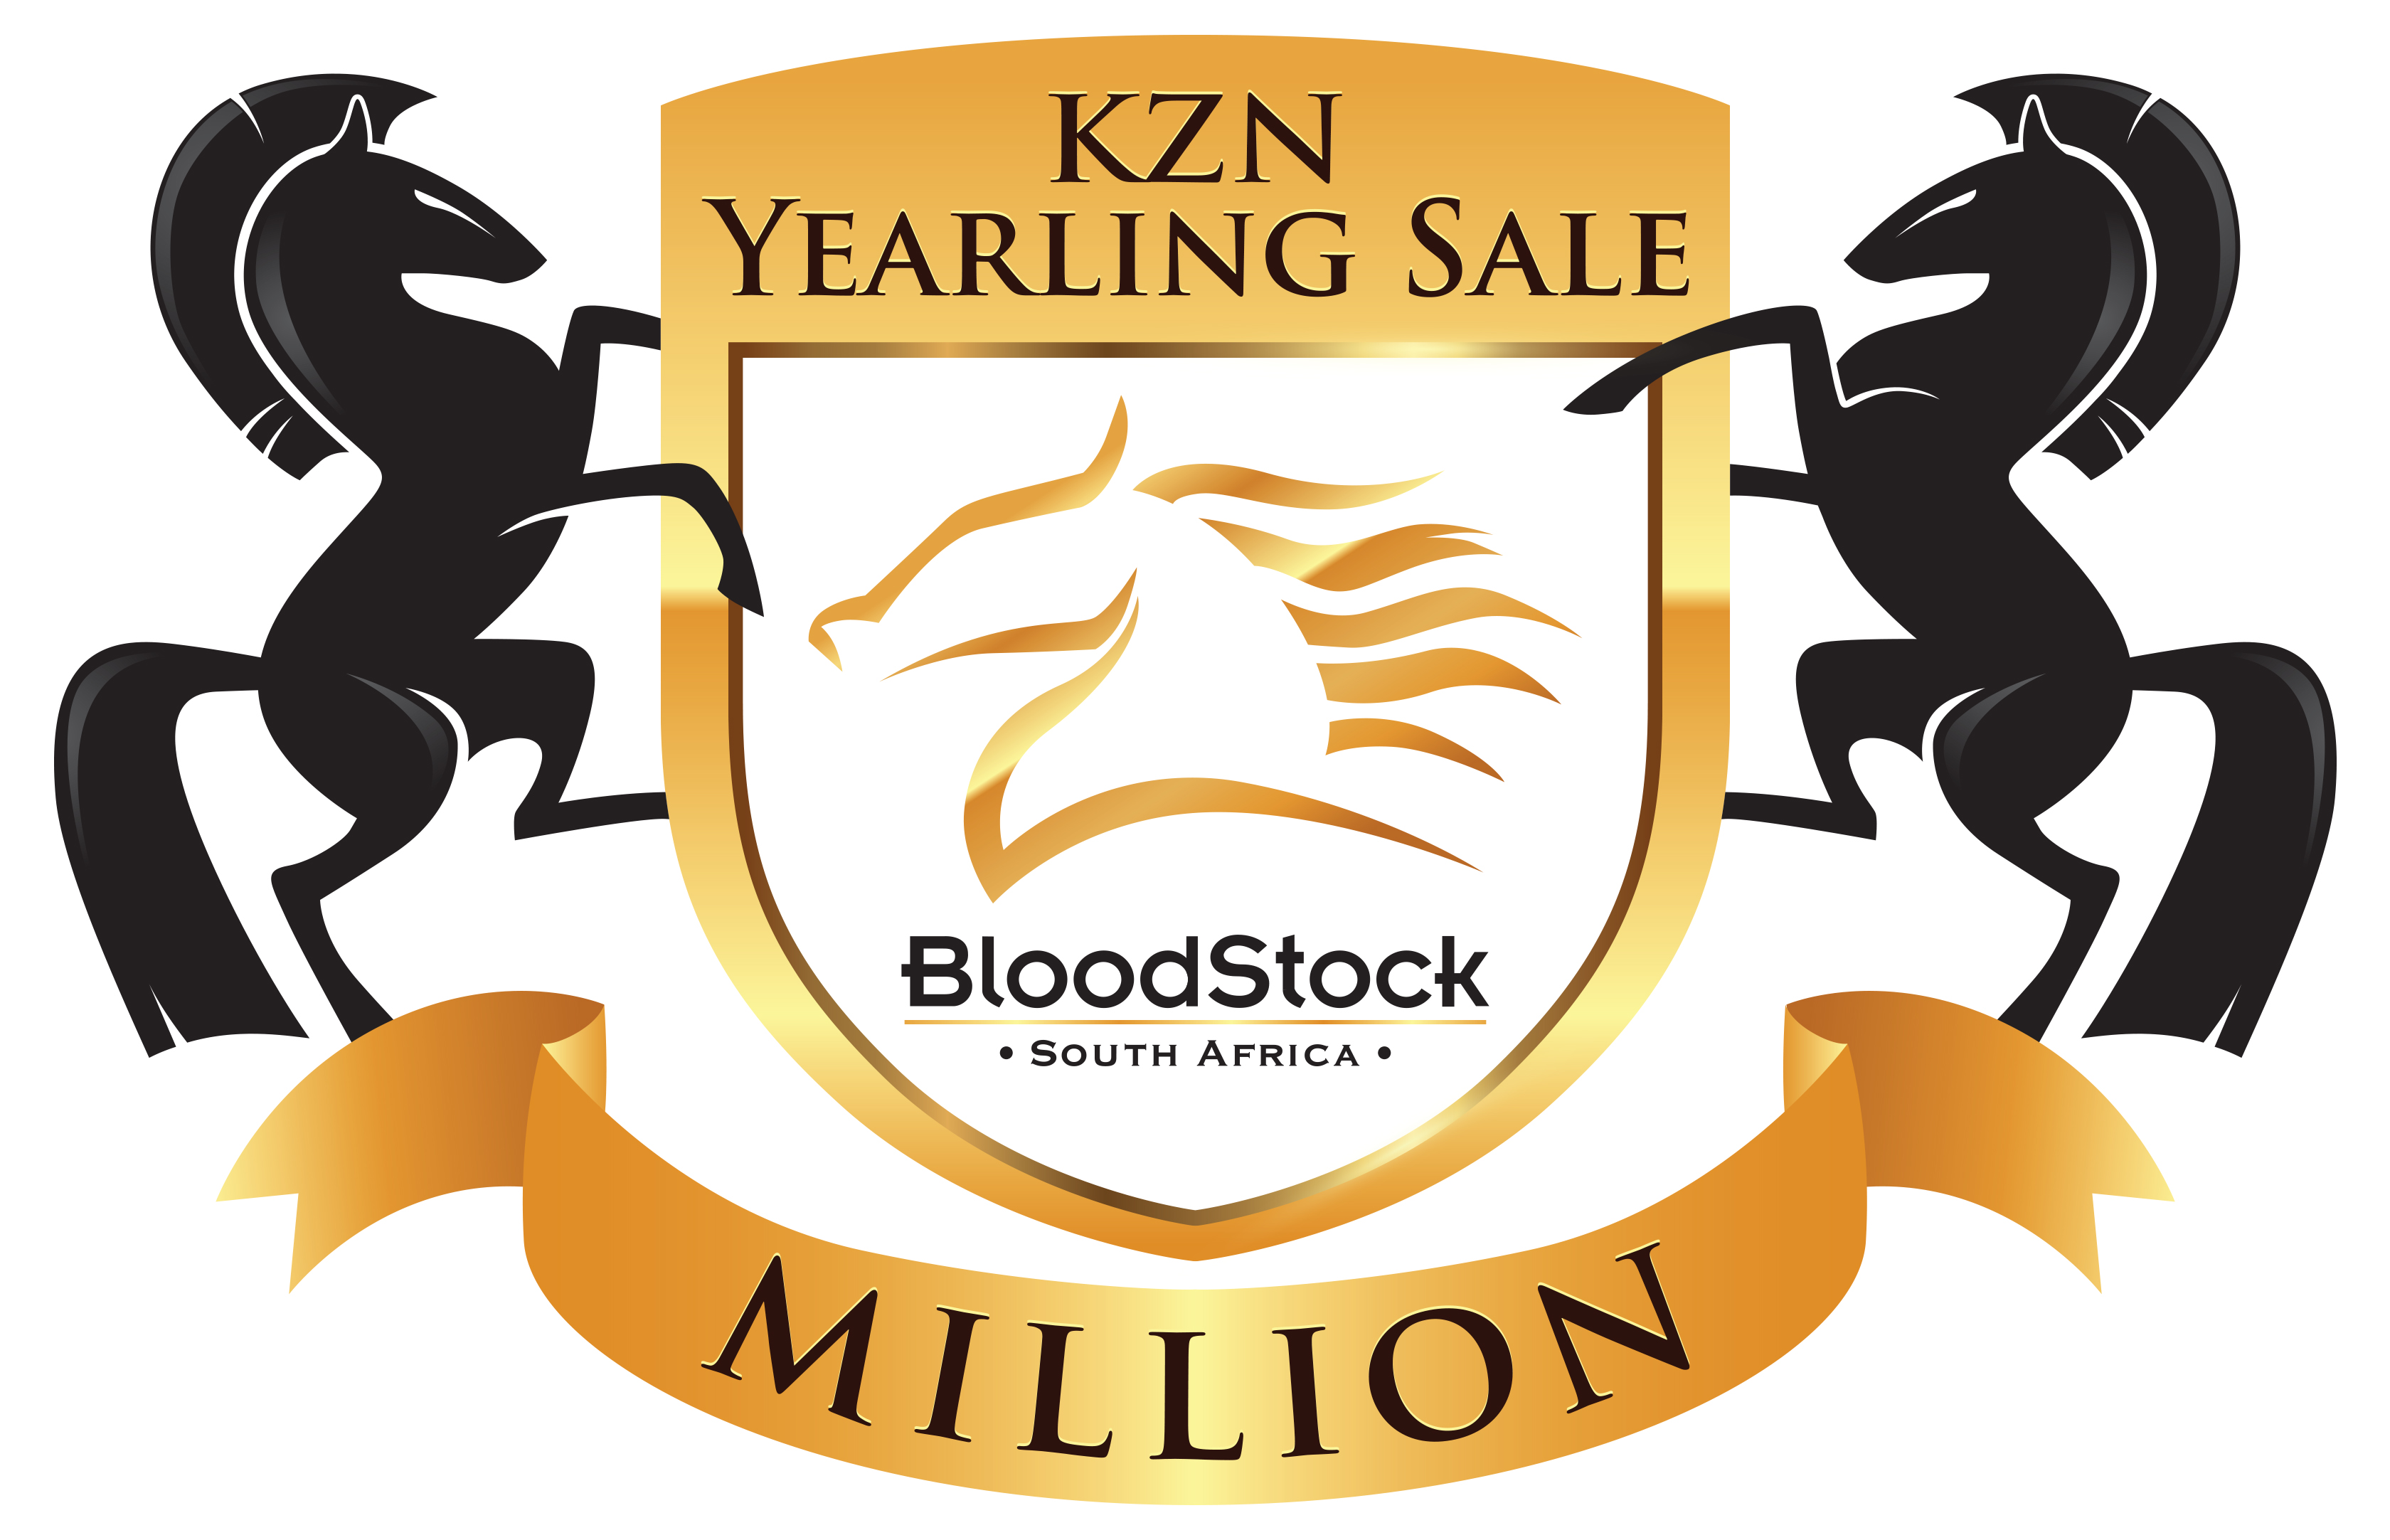 Qualifying KZN-breds For KZN Yearling Sale Million